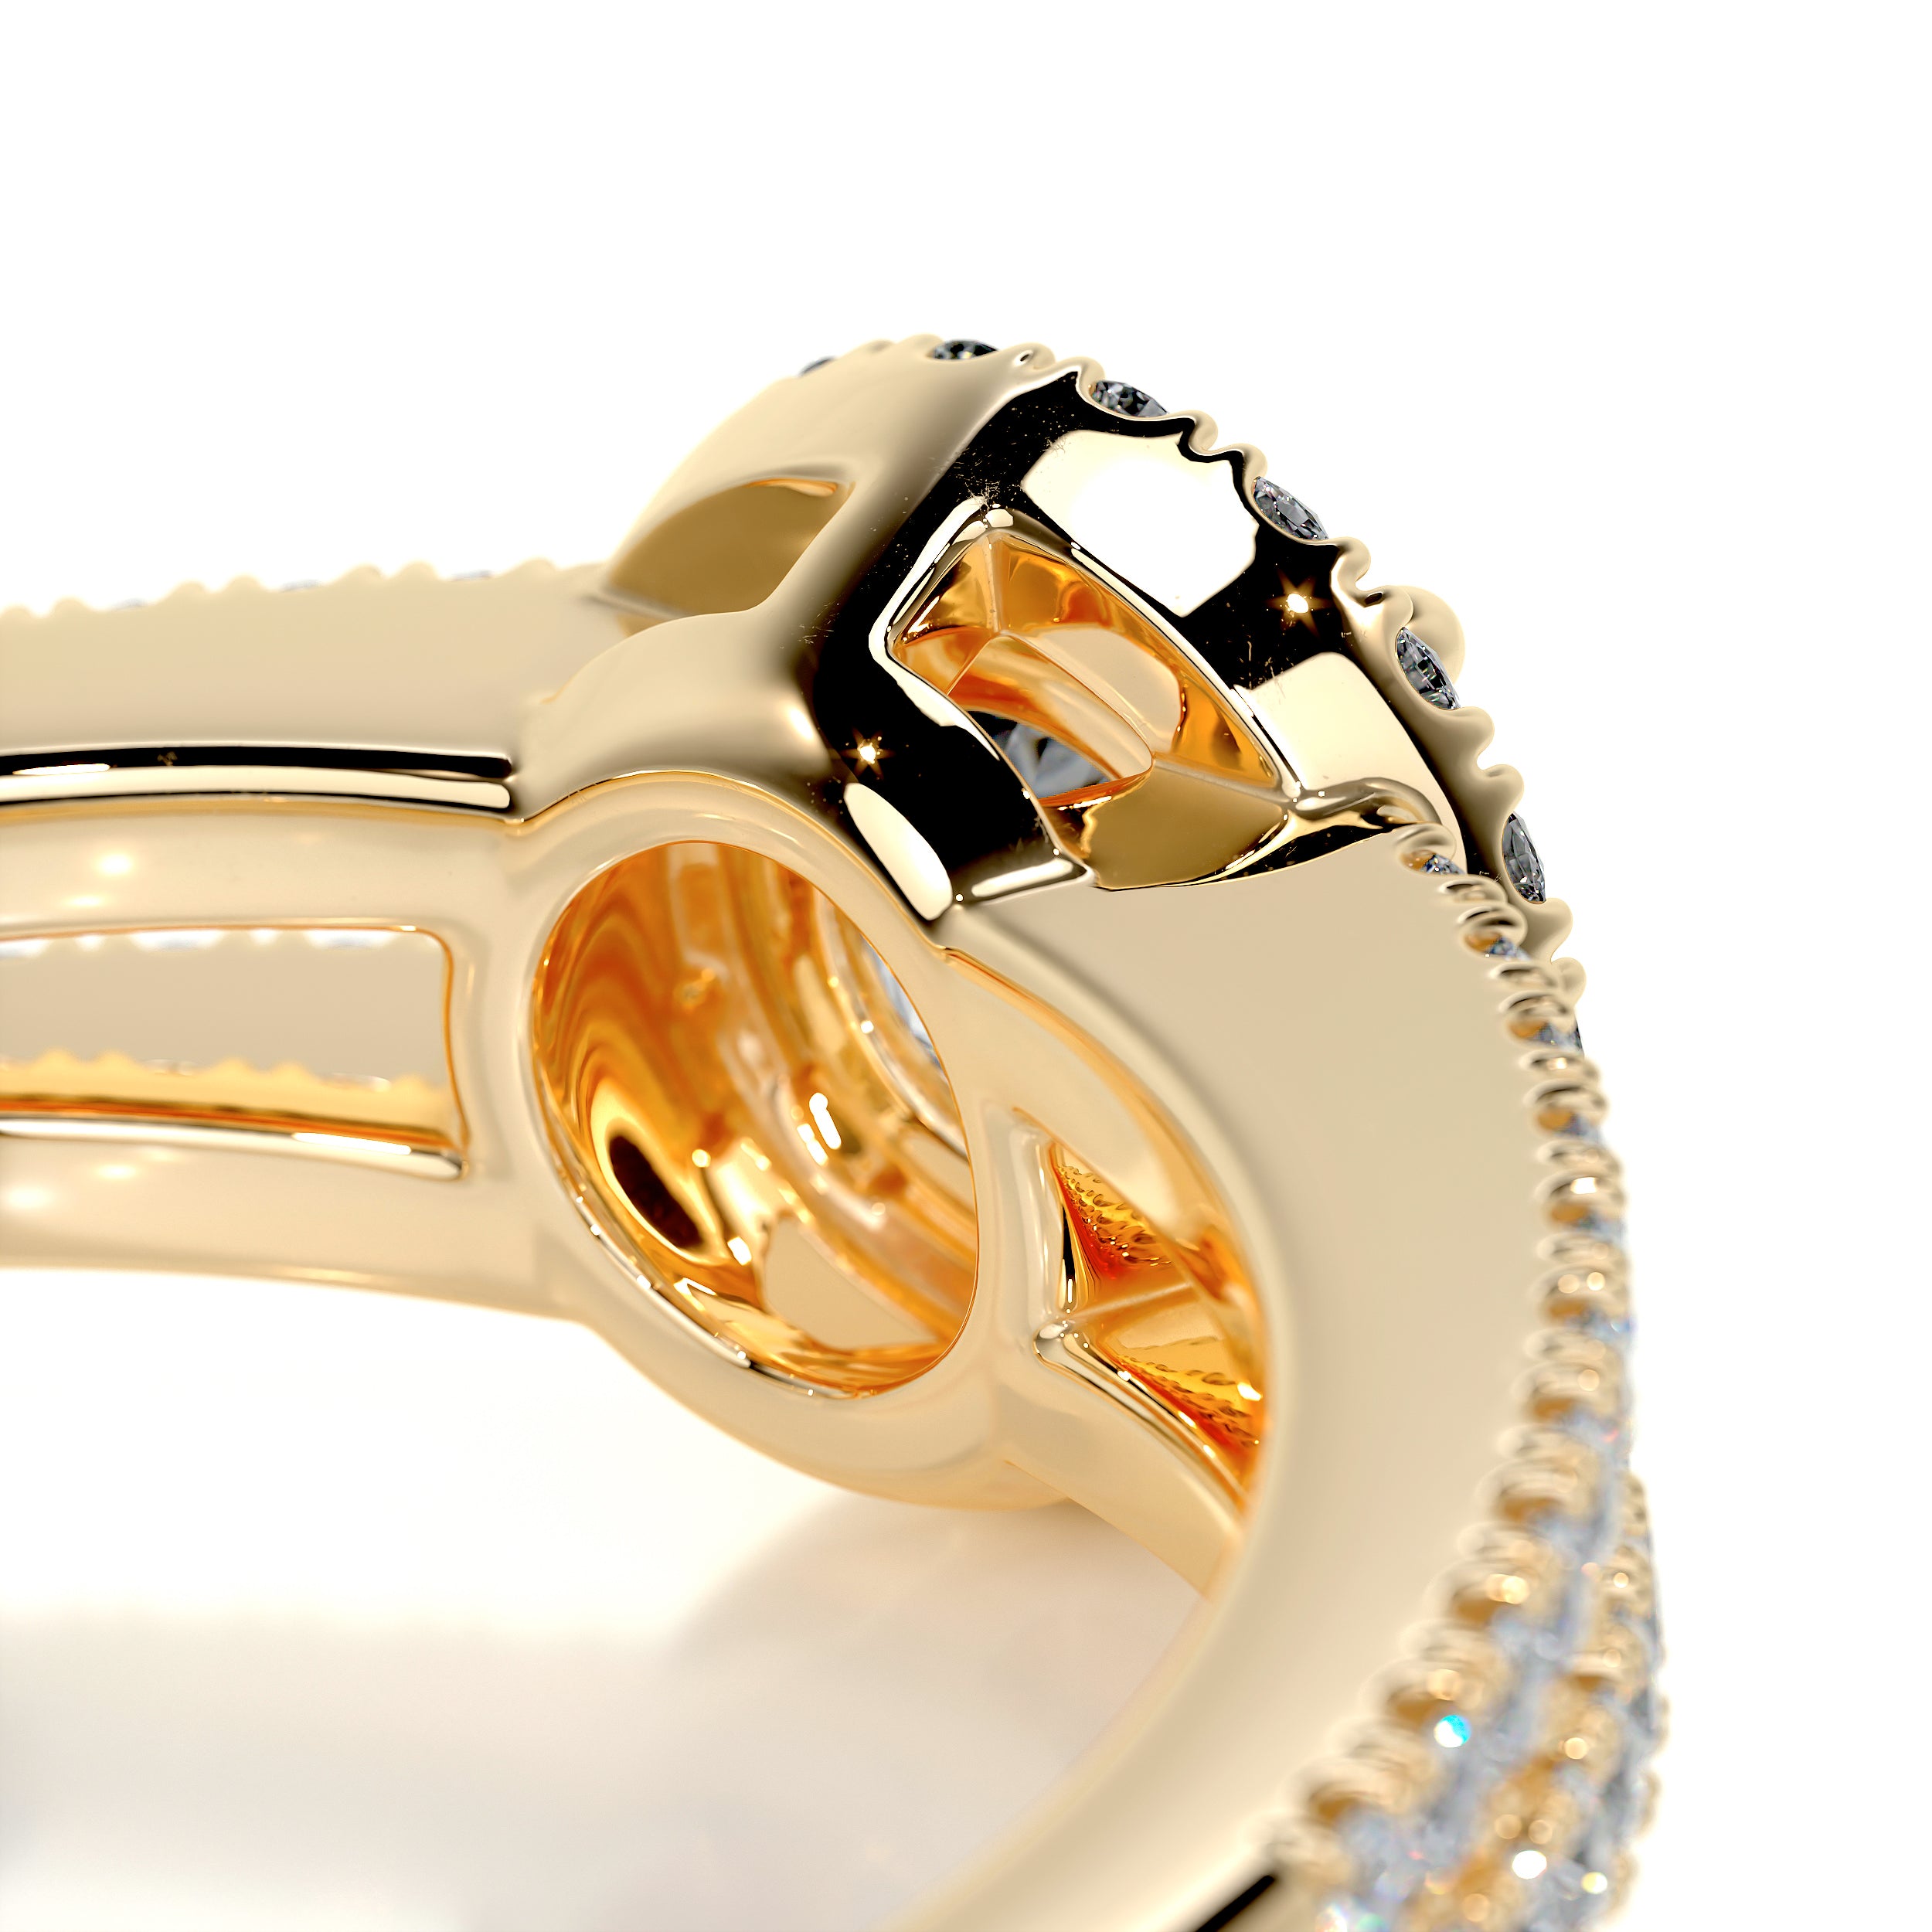 Ruby Diamond Engagement Ring   (0.80 Carat) -18K Yellow Gold